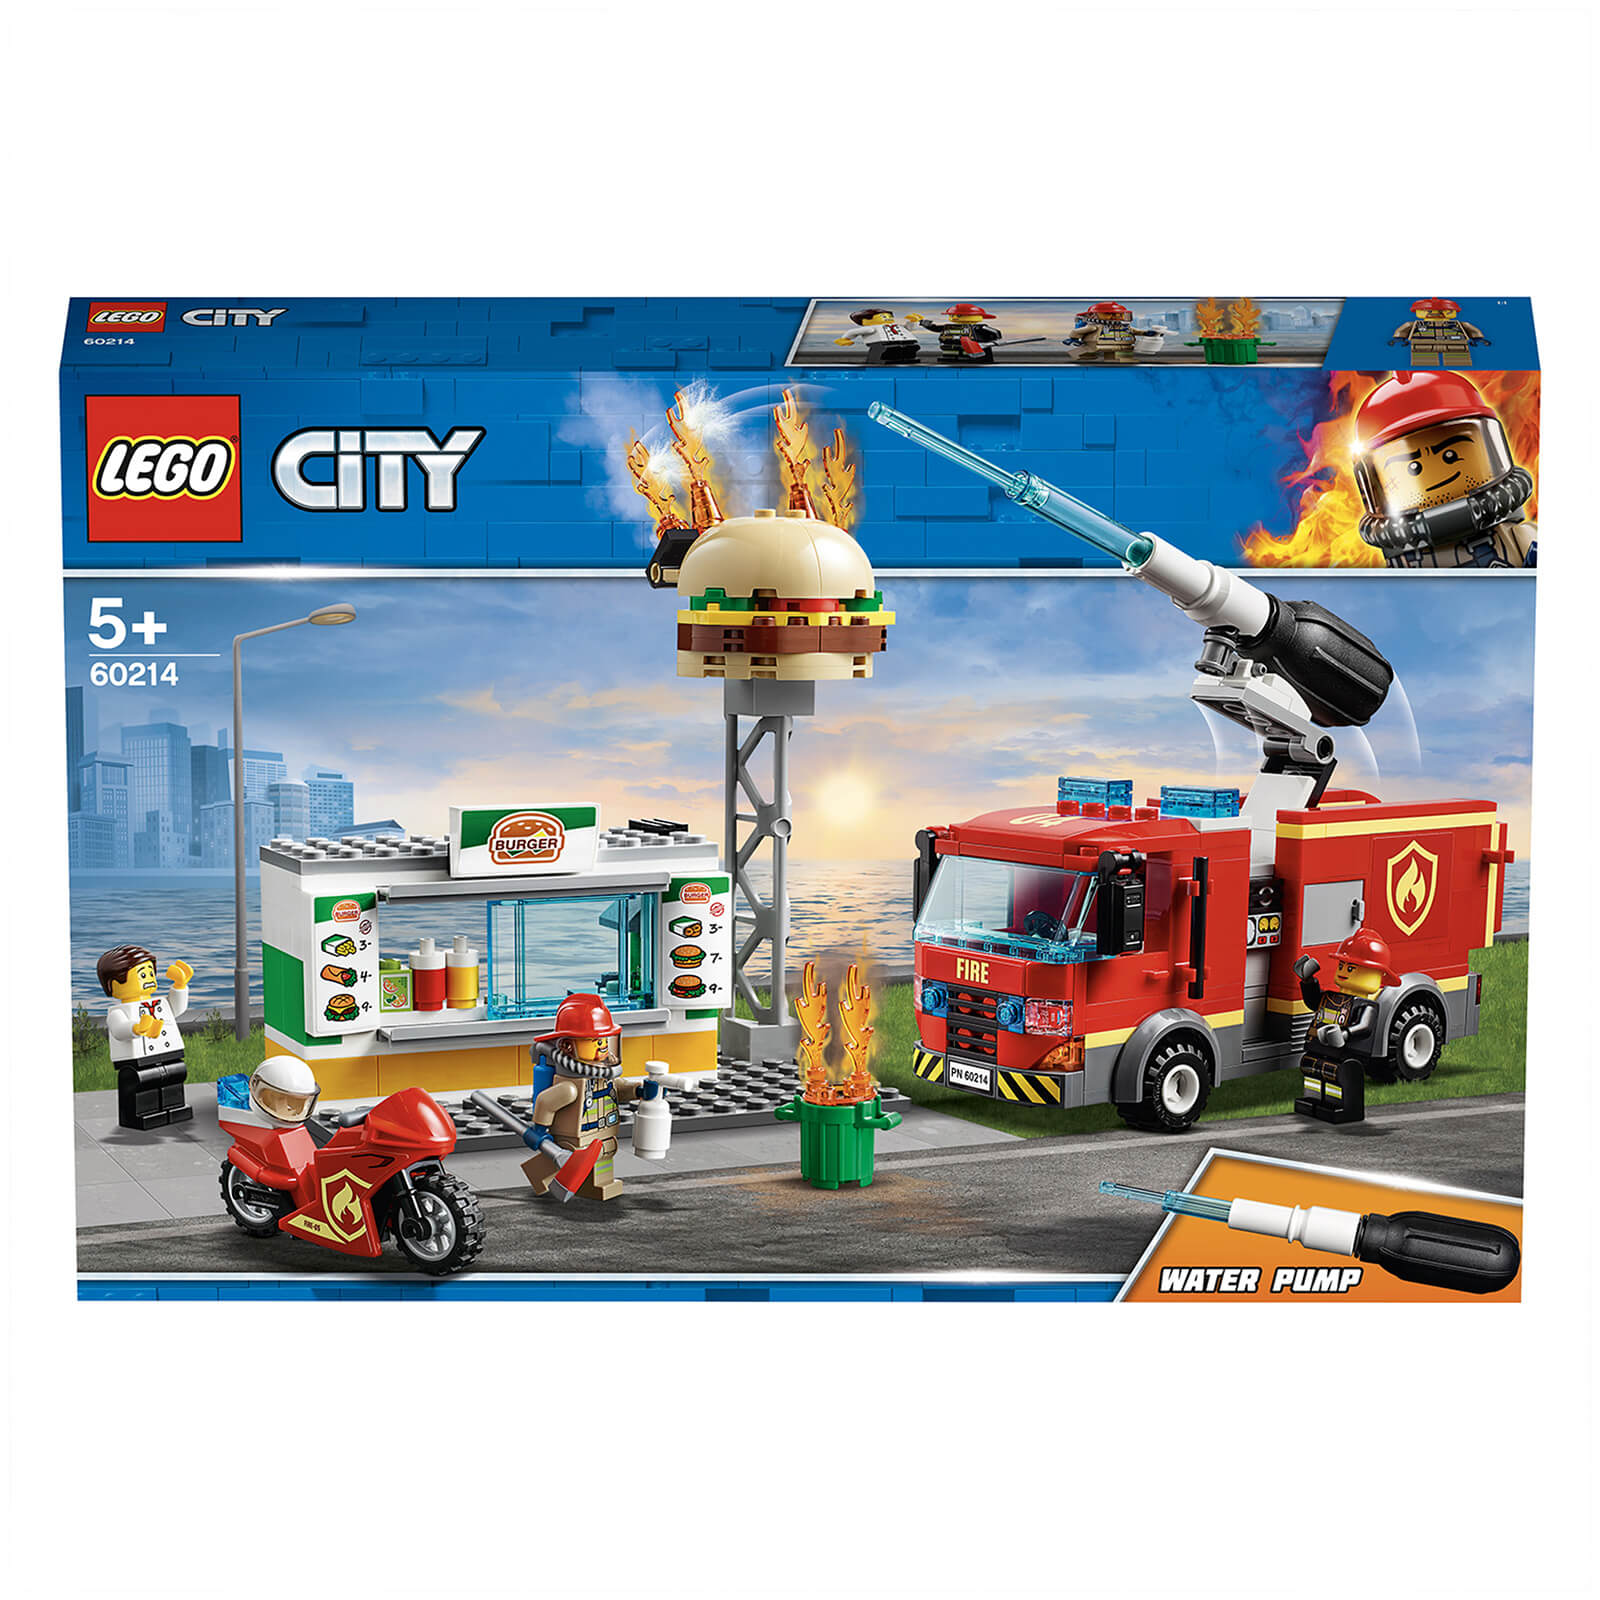 Lego City: Burger Bar Fire Rescue Engine Toy (60214)